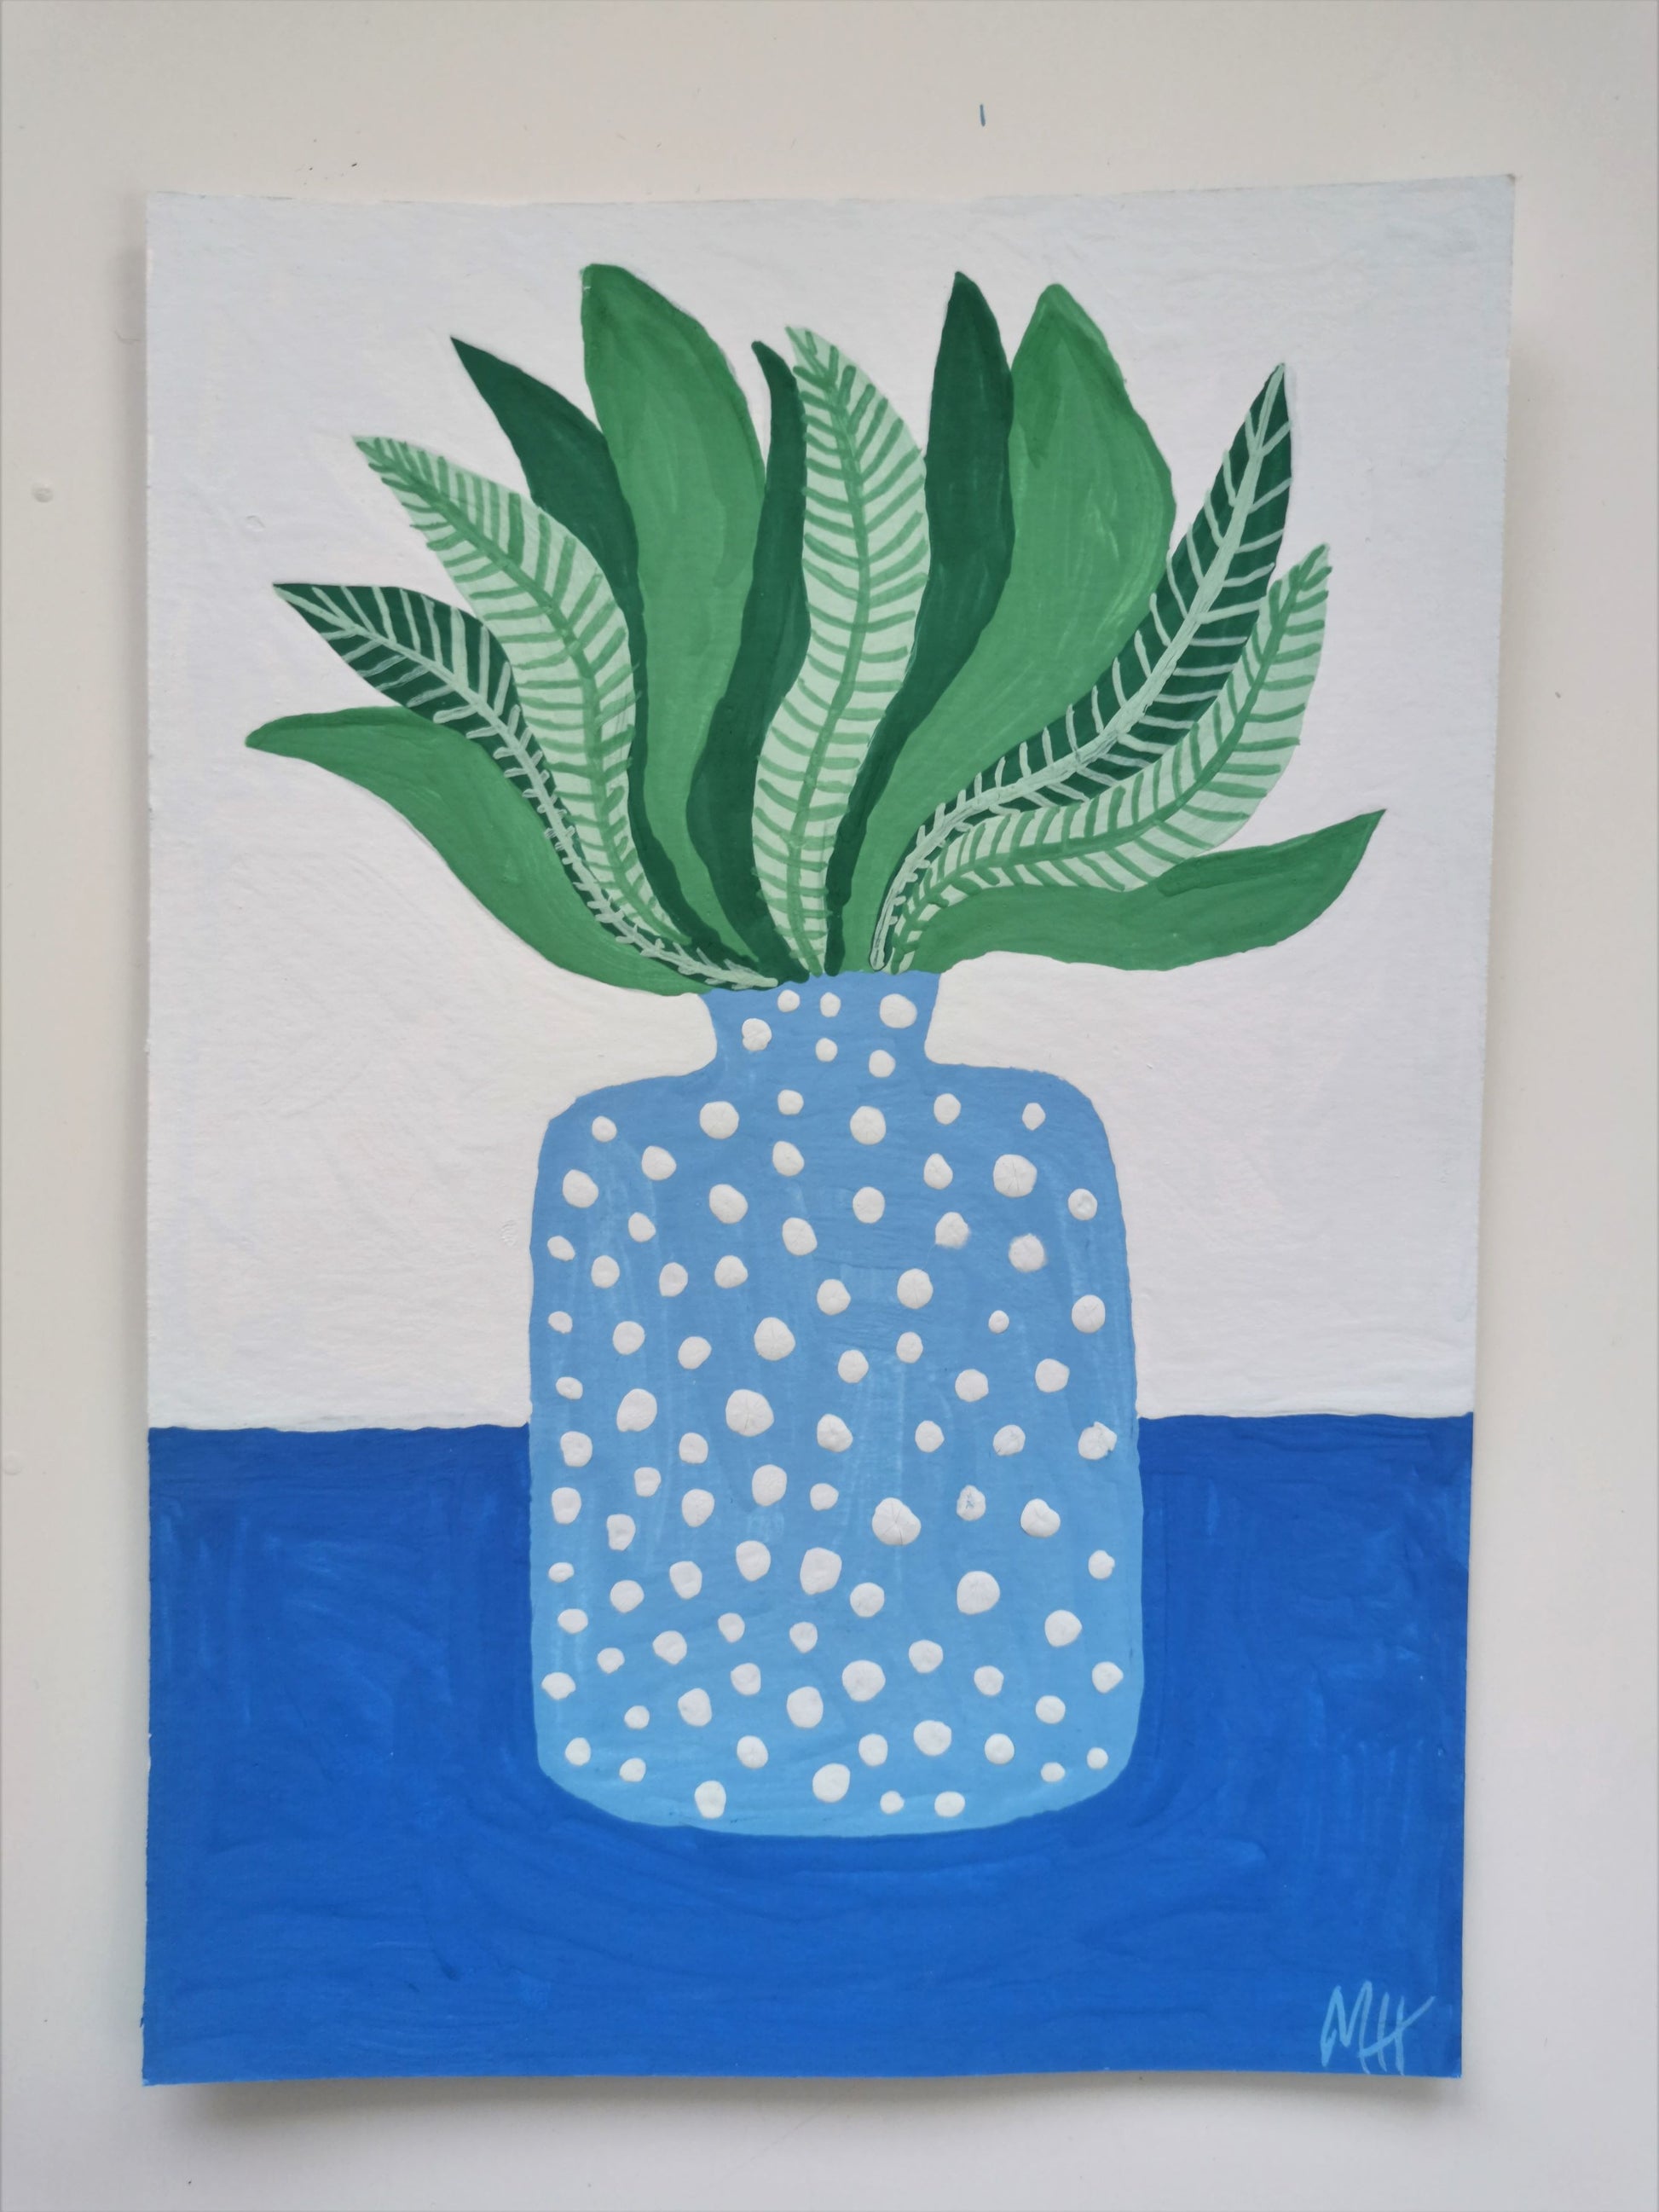 Plante på blåt bord - Originalt gouache-maleri på akvarelpapir inklusiv egetræsramme (A5: 14.8 x 21 cm) Nymaane